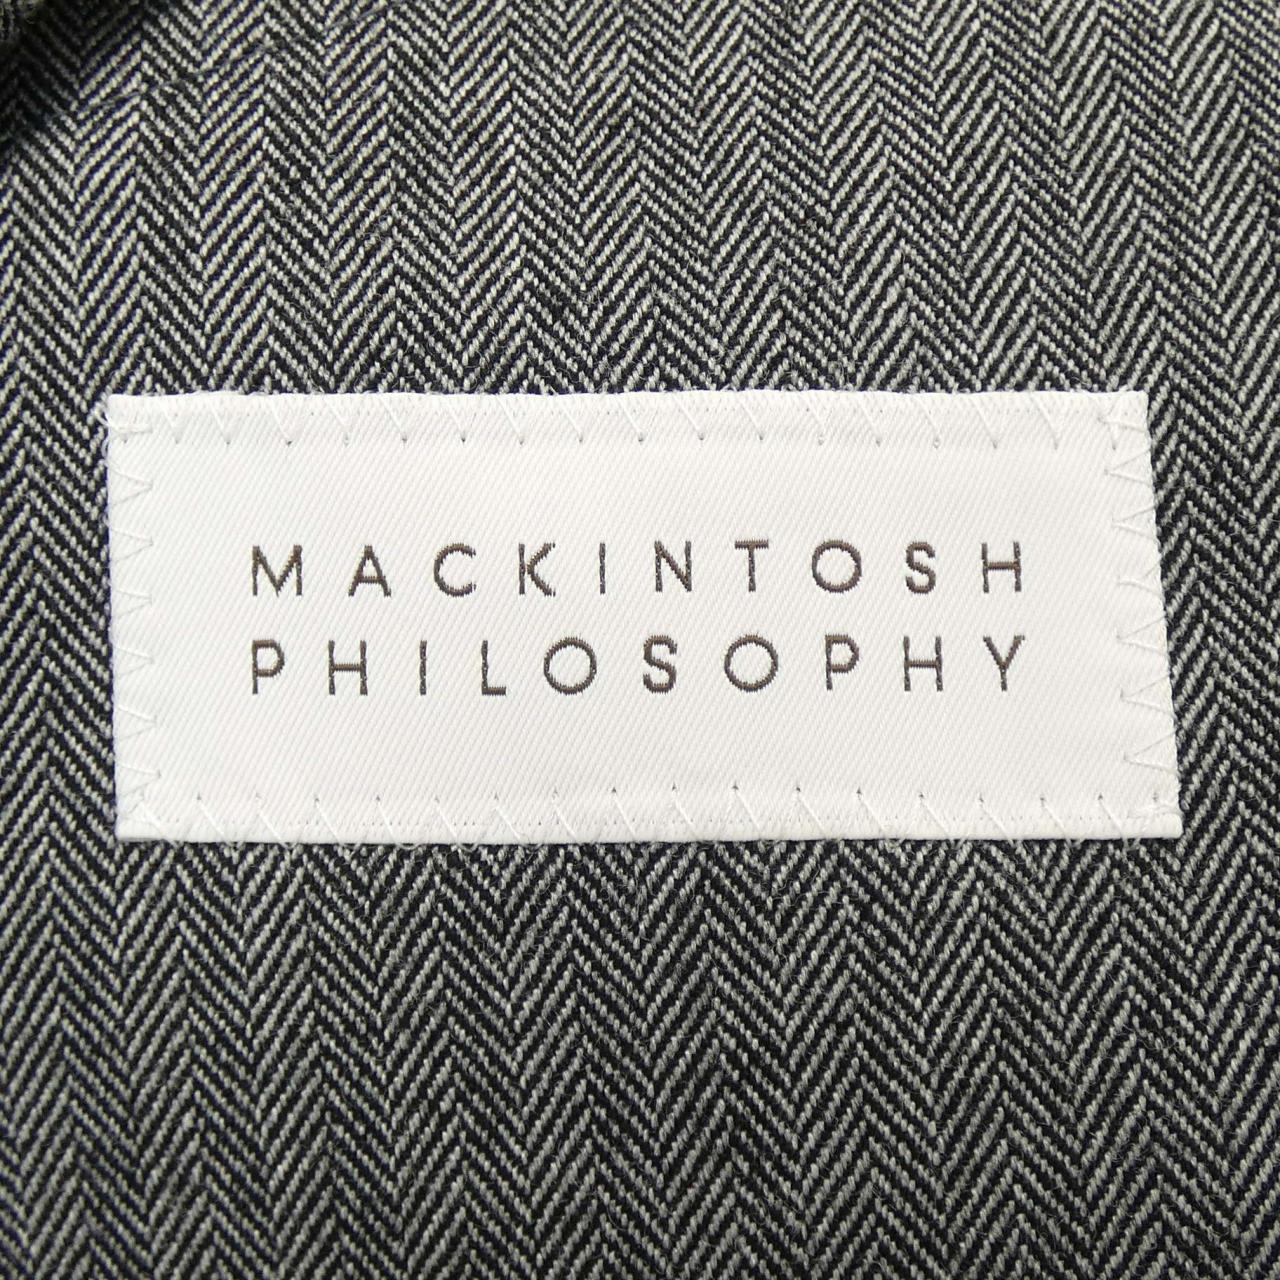 MACKINTOSH PHILOSOPH Tailored Jacket